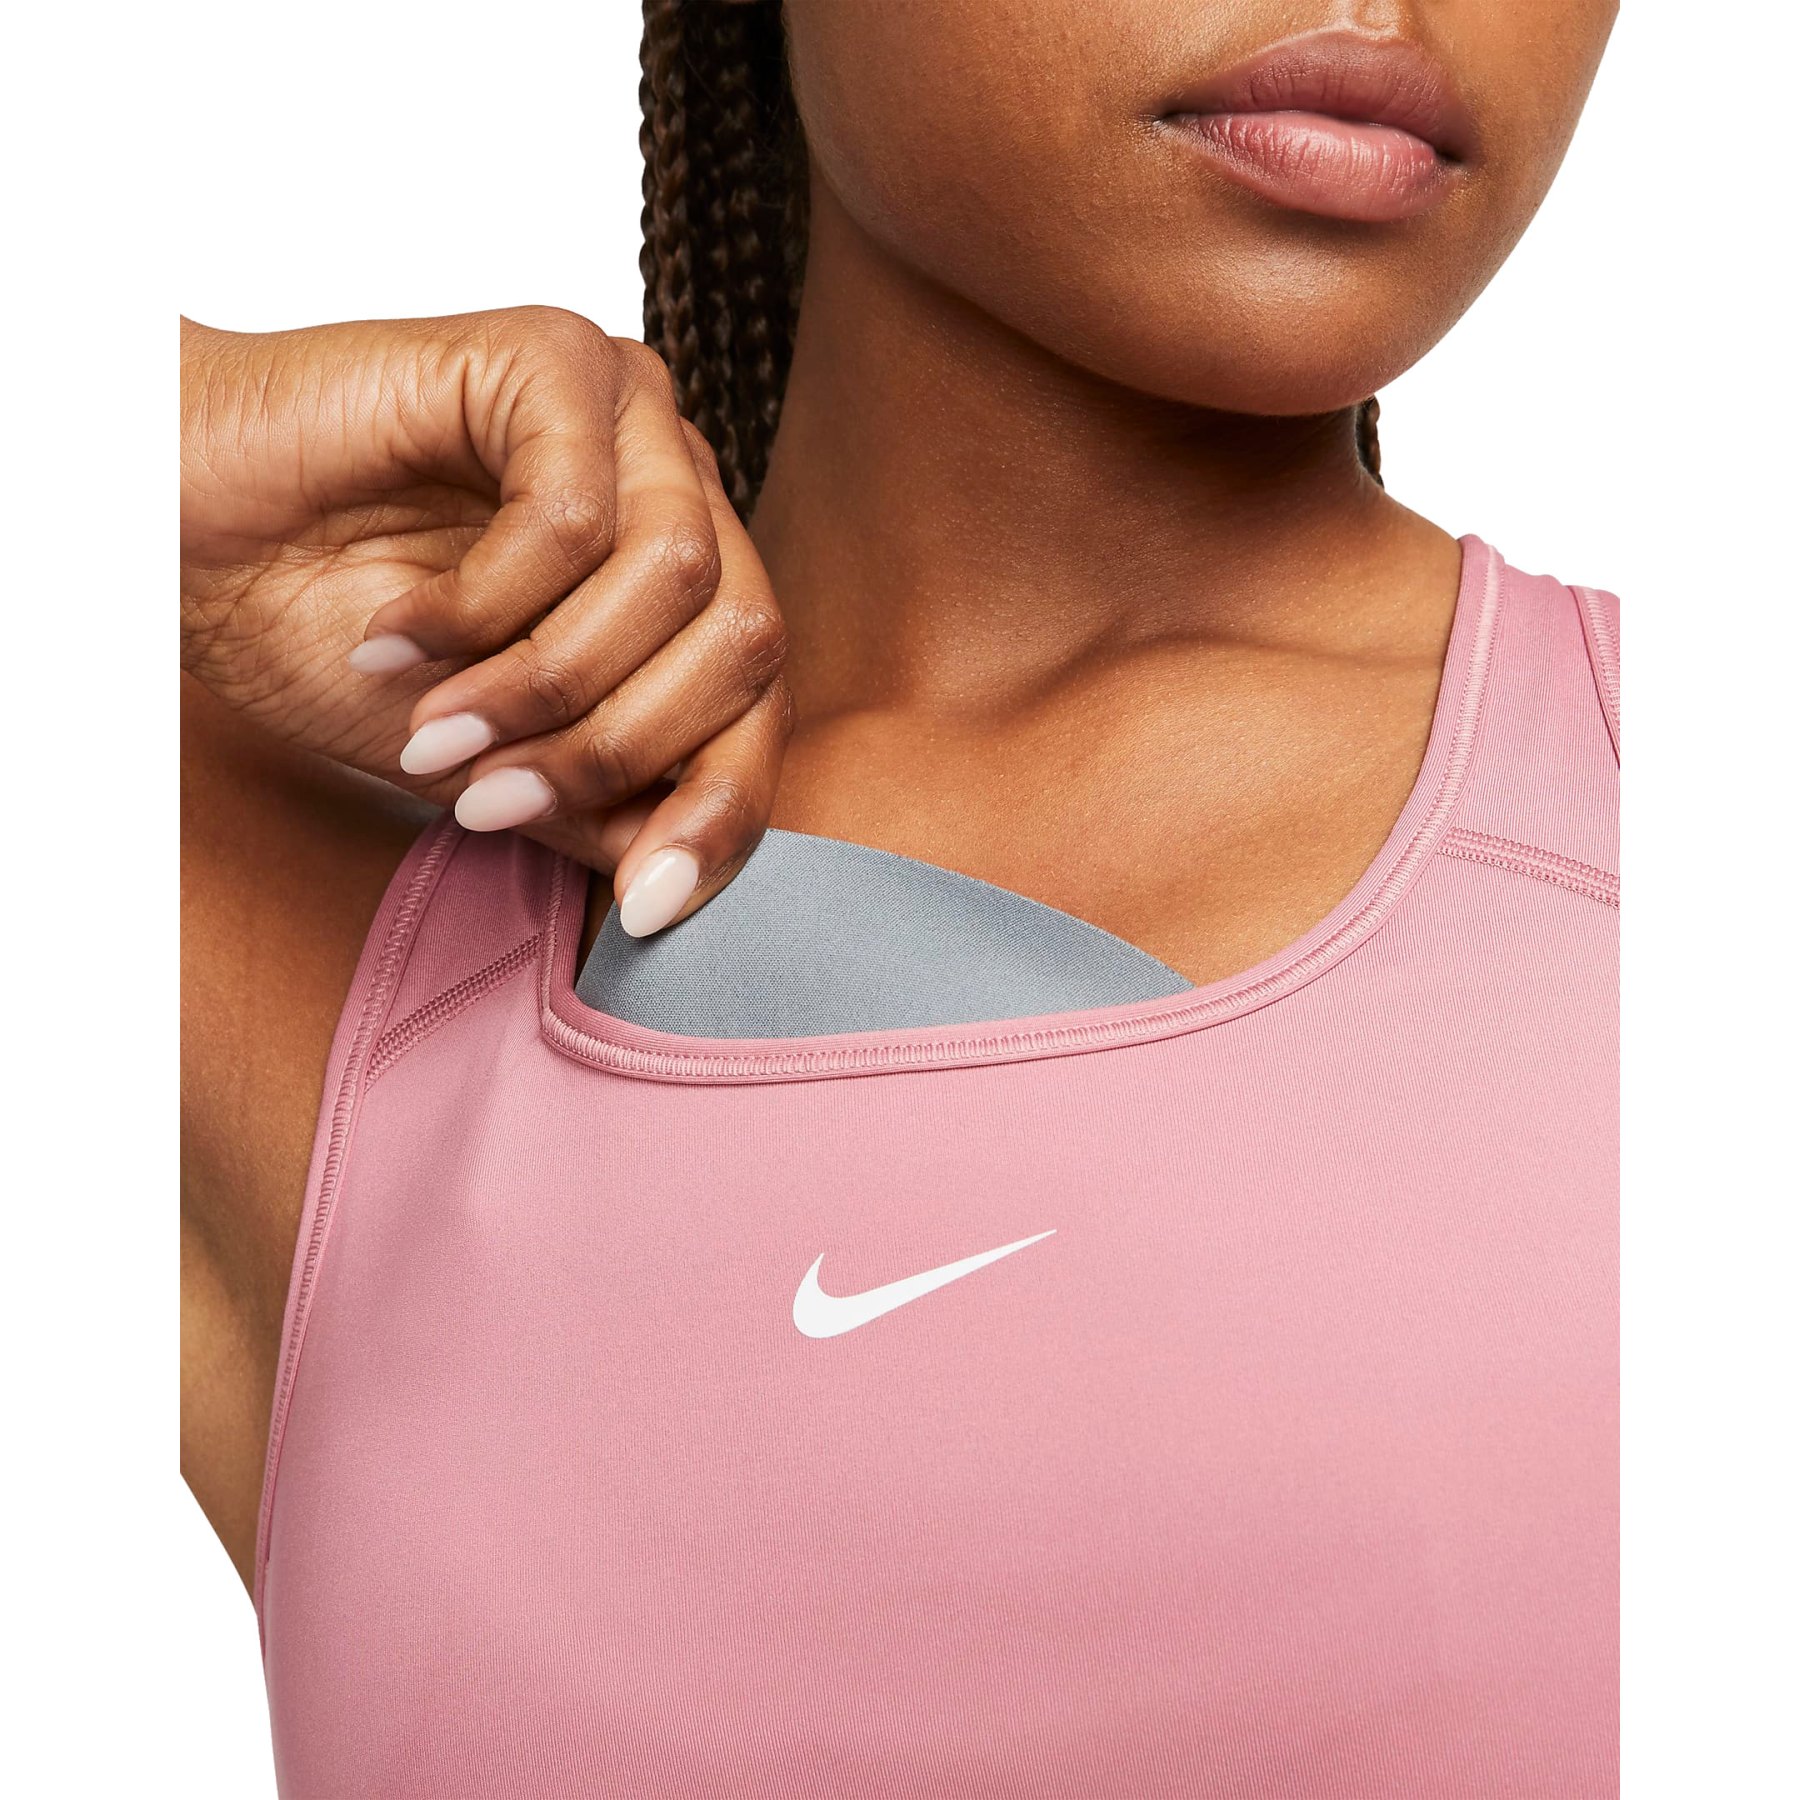 Nike, Intimates & Sleepwear, Nike Drifit Swoosh Womens Small Support  Piece Pad Sports Bra Bv363610